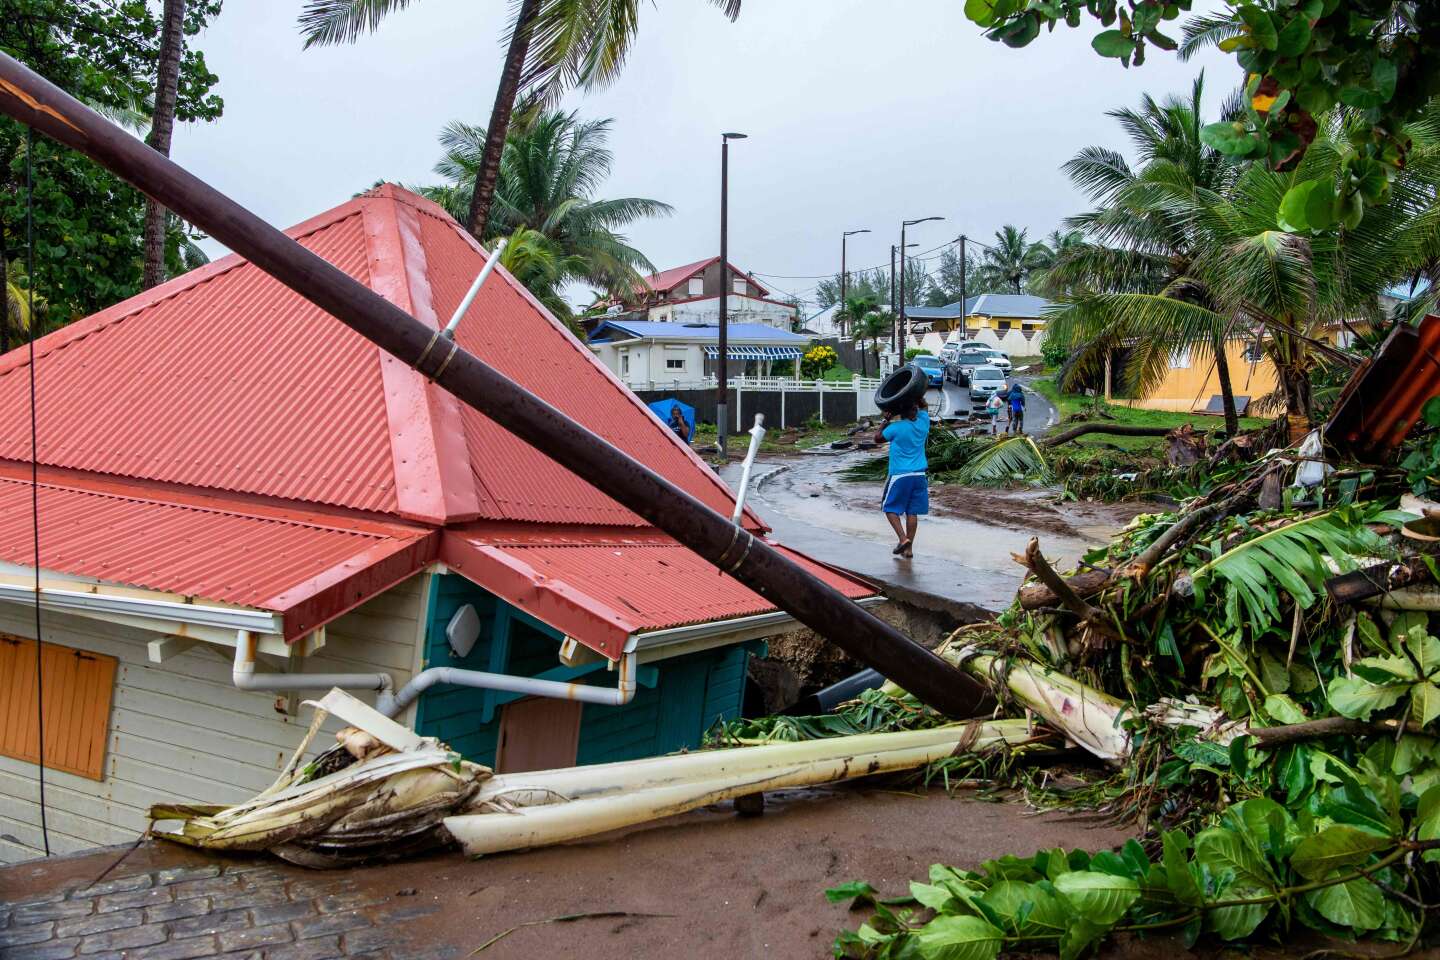 Tempête Fiona en Guadeloupe : l’état de catastrophe naturelle sera reconnu, annonce Gérald Darmanin